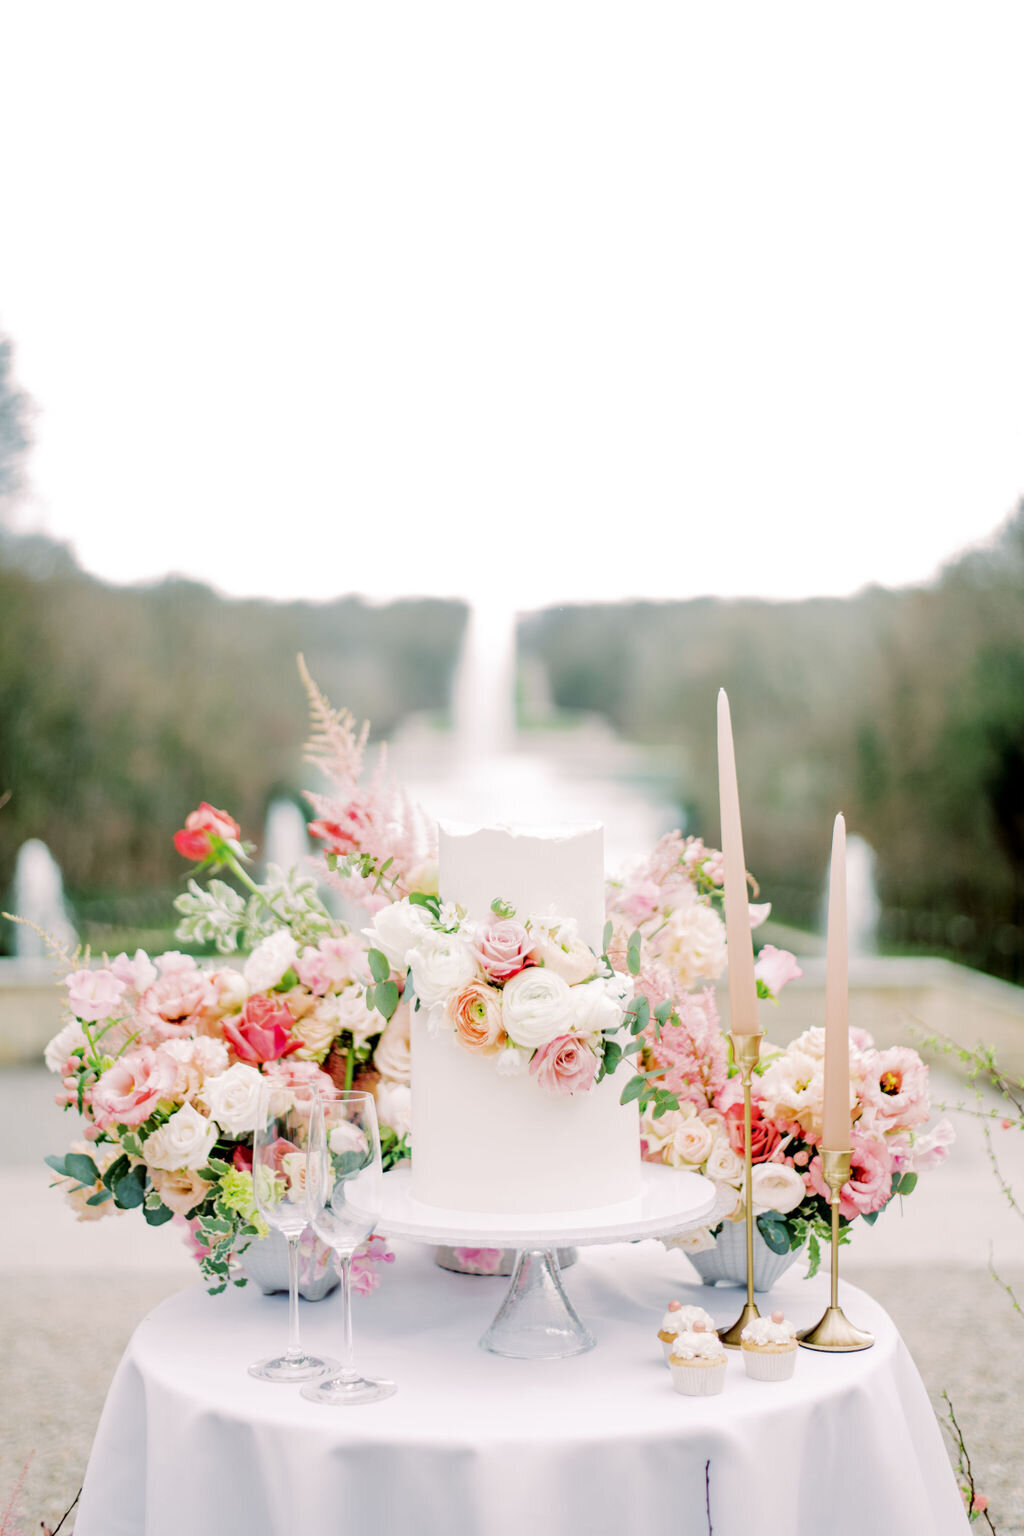 Wedding-cake-décoré-de-fleurs-style-fine-art